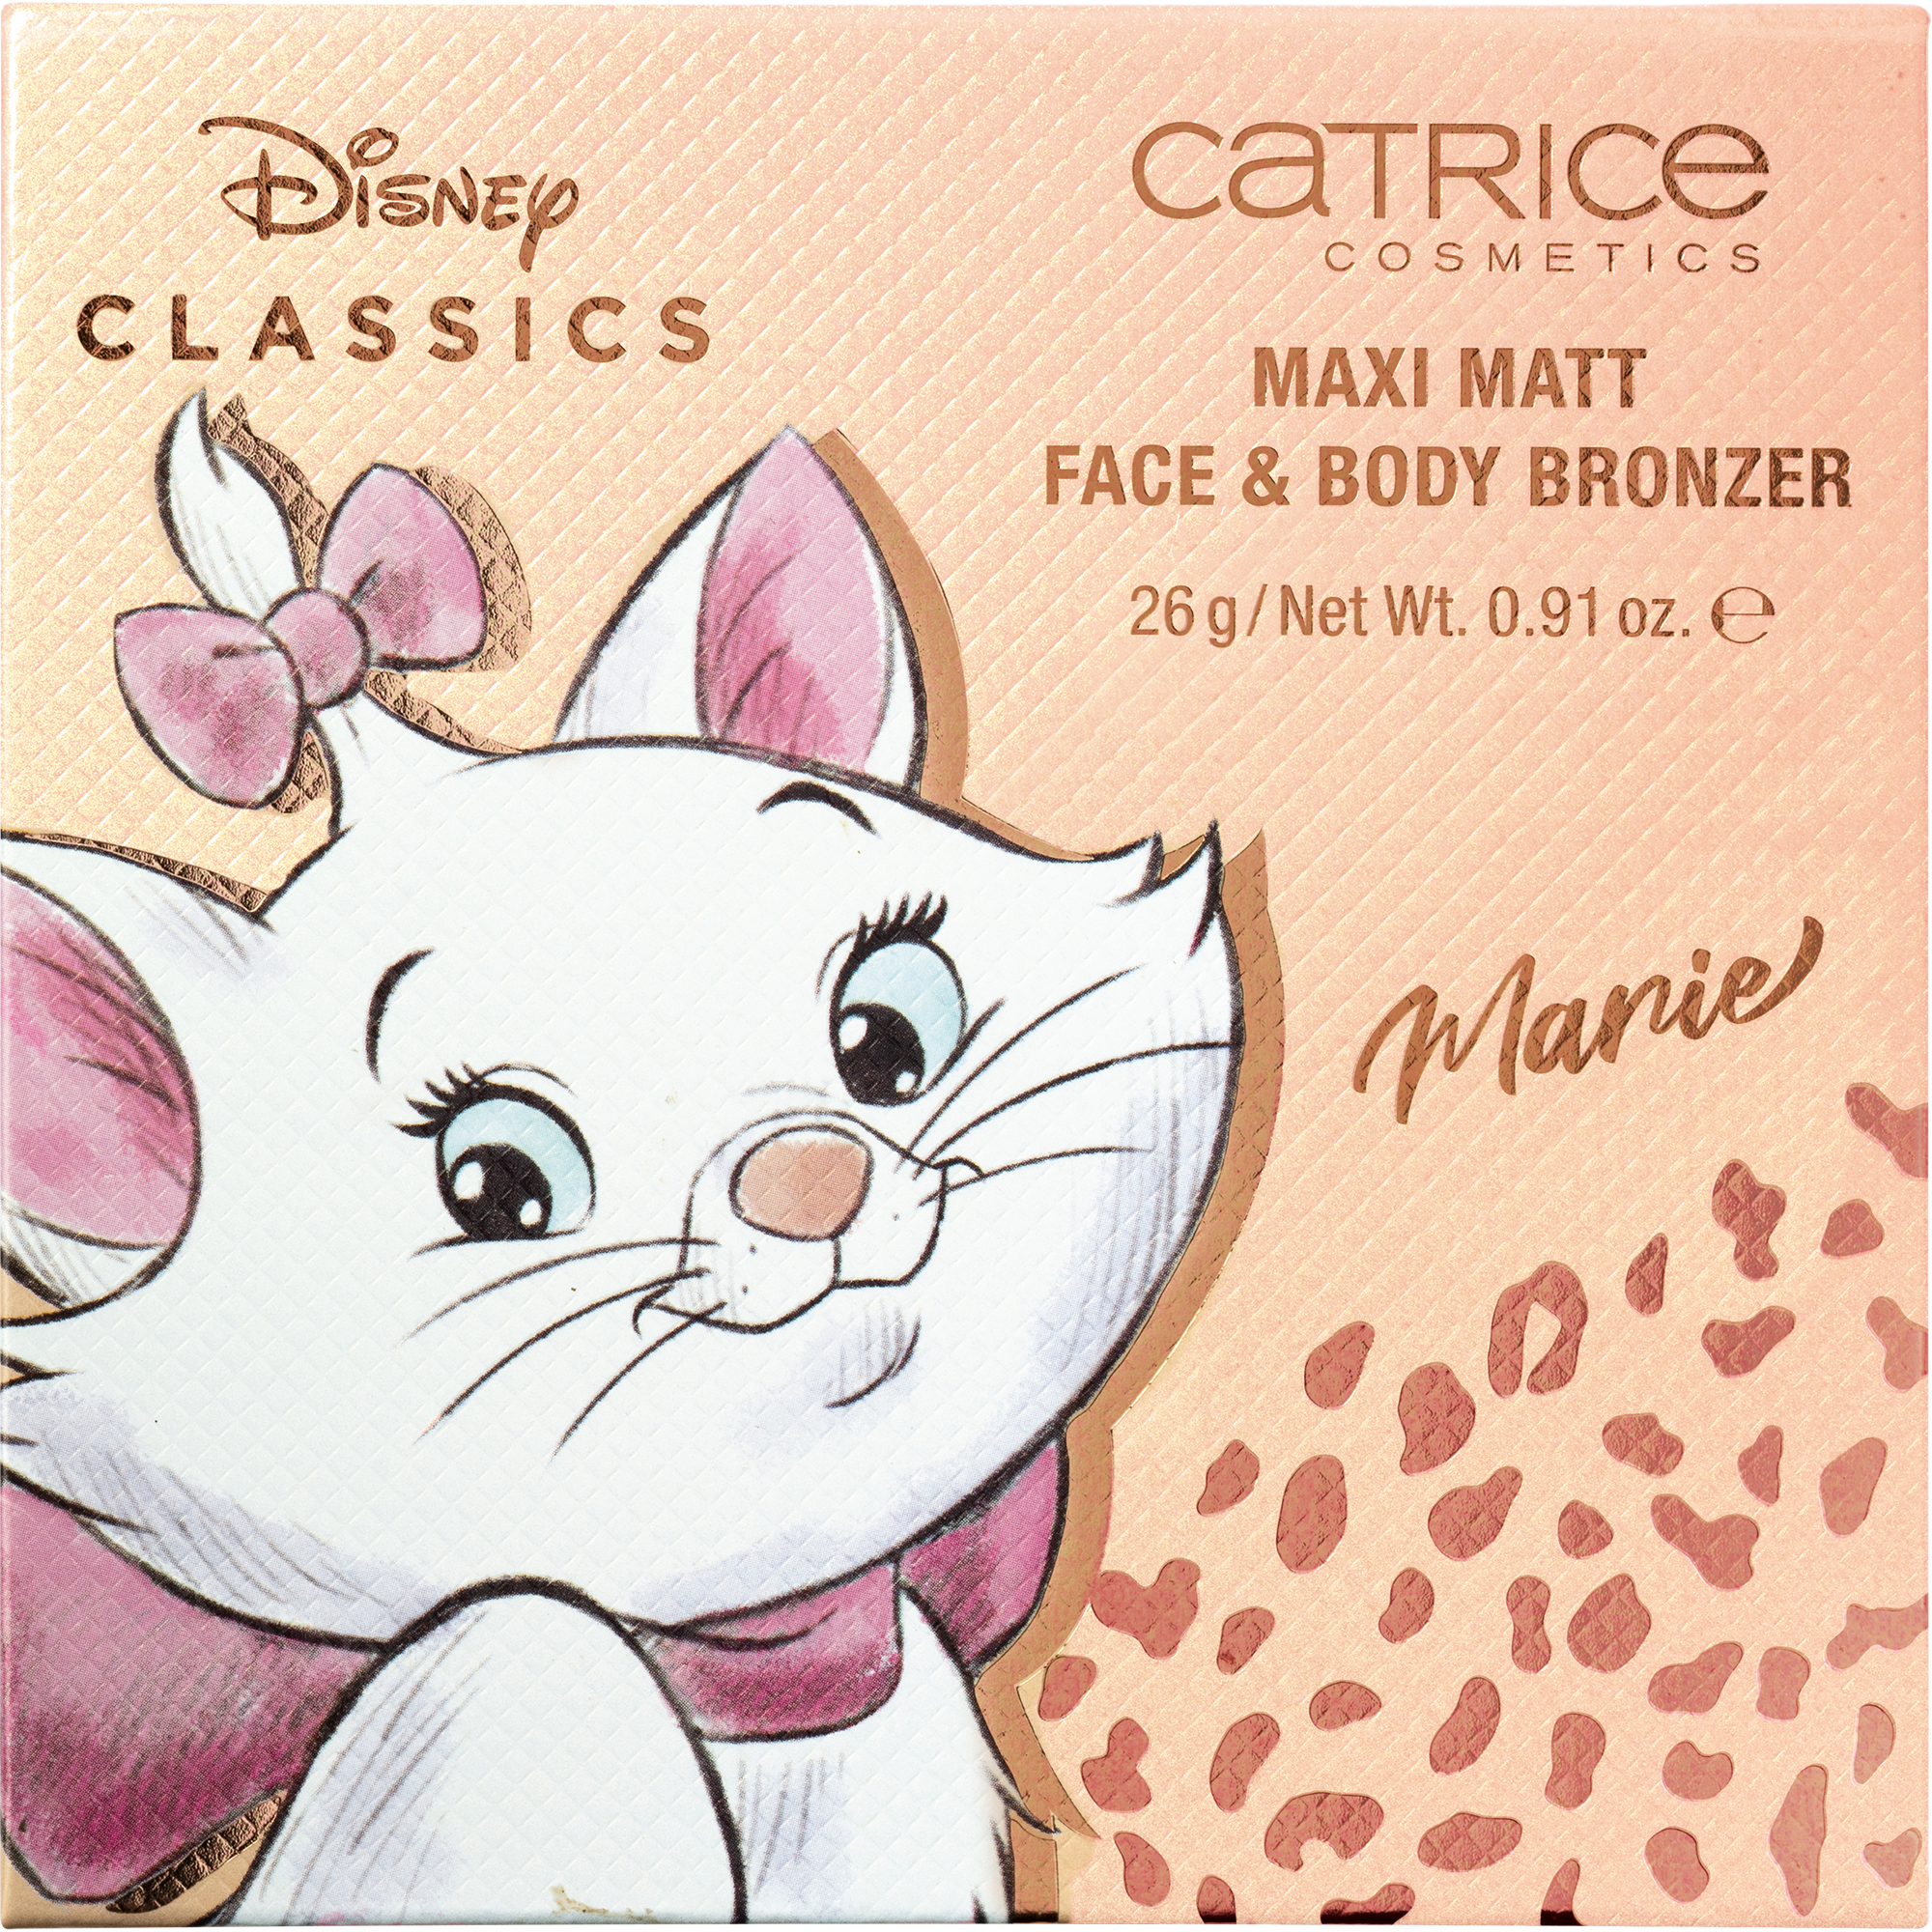 Disney Classics Marie Maxi Matt Face & Body Bronzer